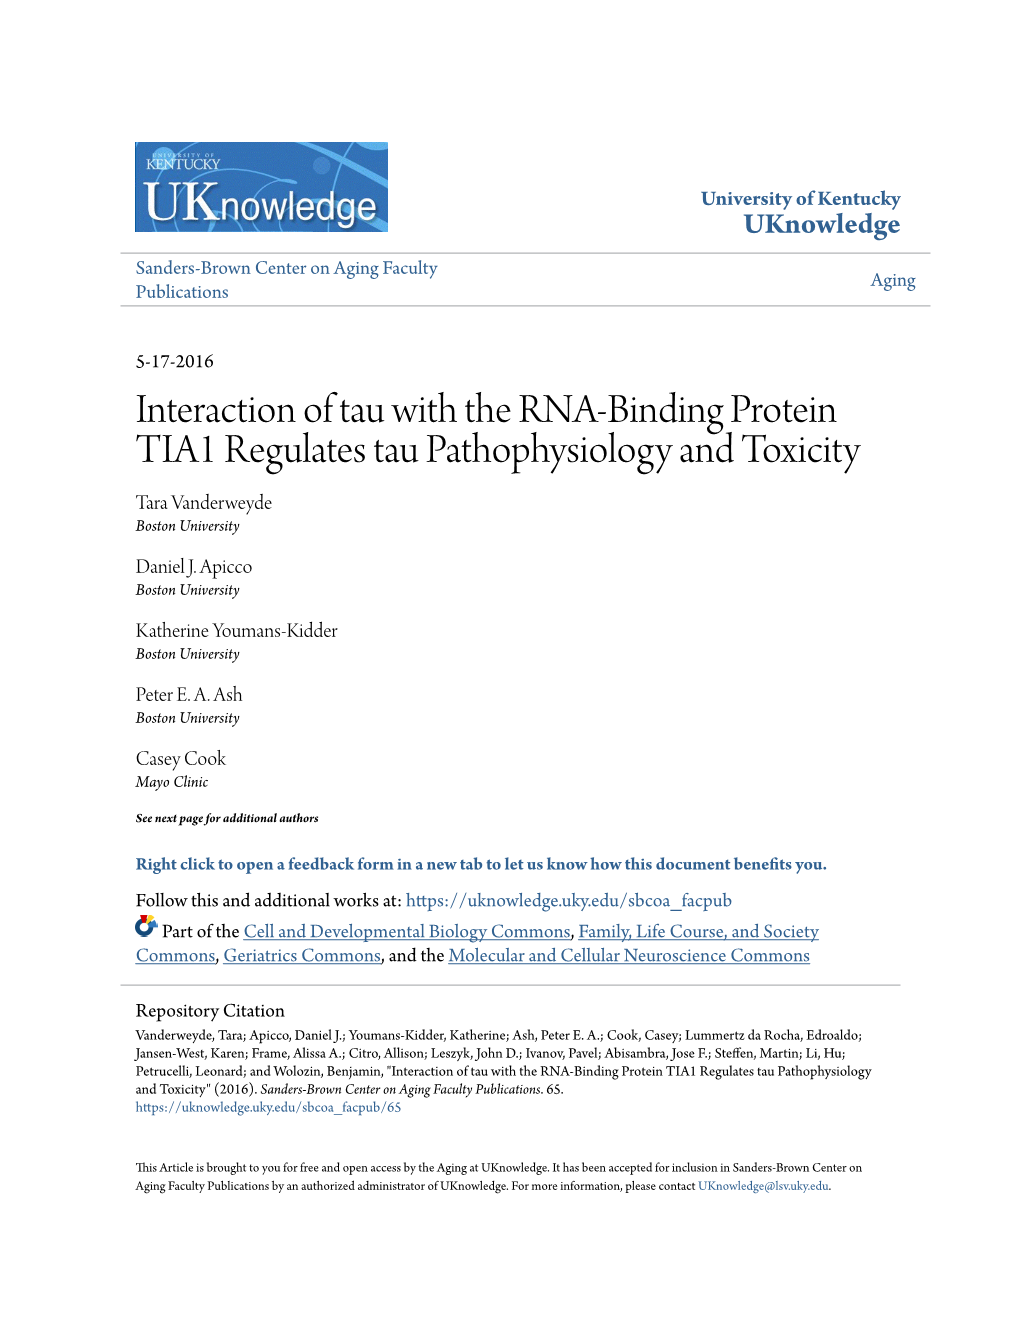 Interaction of Tau with the RNA-Binding Protein TIA1 Regulates Tau Pathophysiology and Toxicity Tara Vanderweyde Boston University